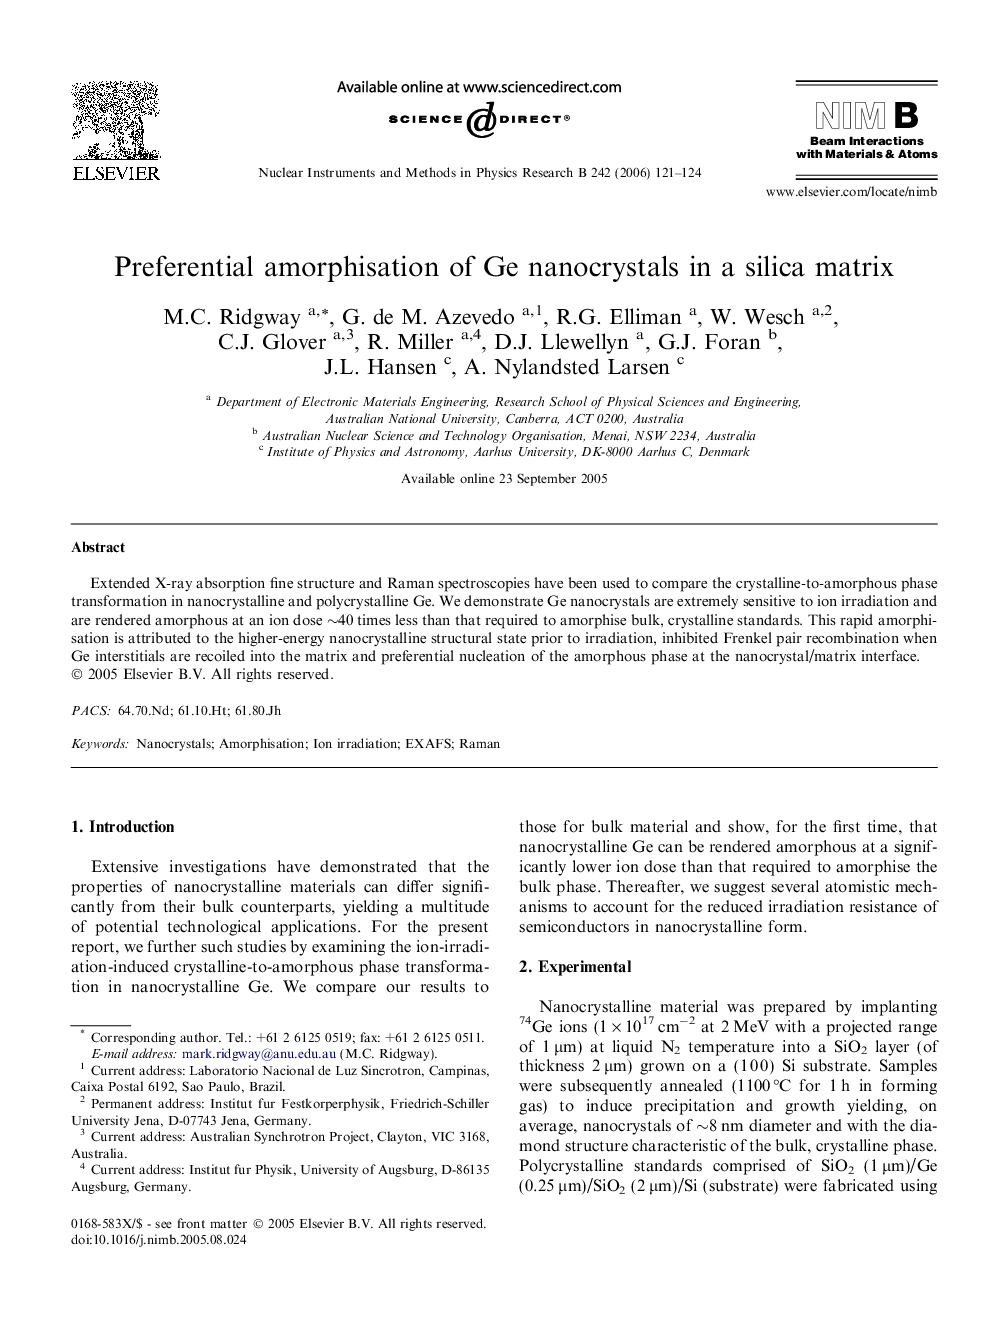 Preferential amorphisation of Ge nanocrystals in a silica matrix